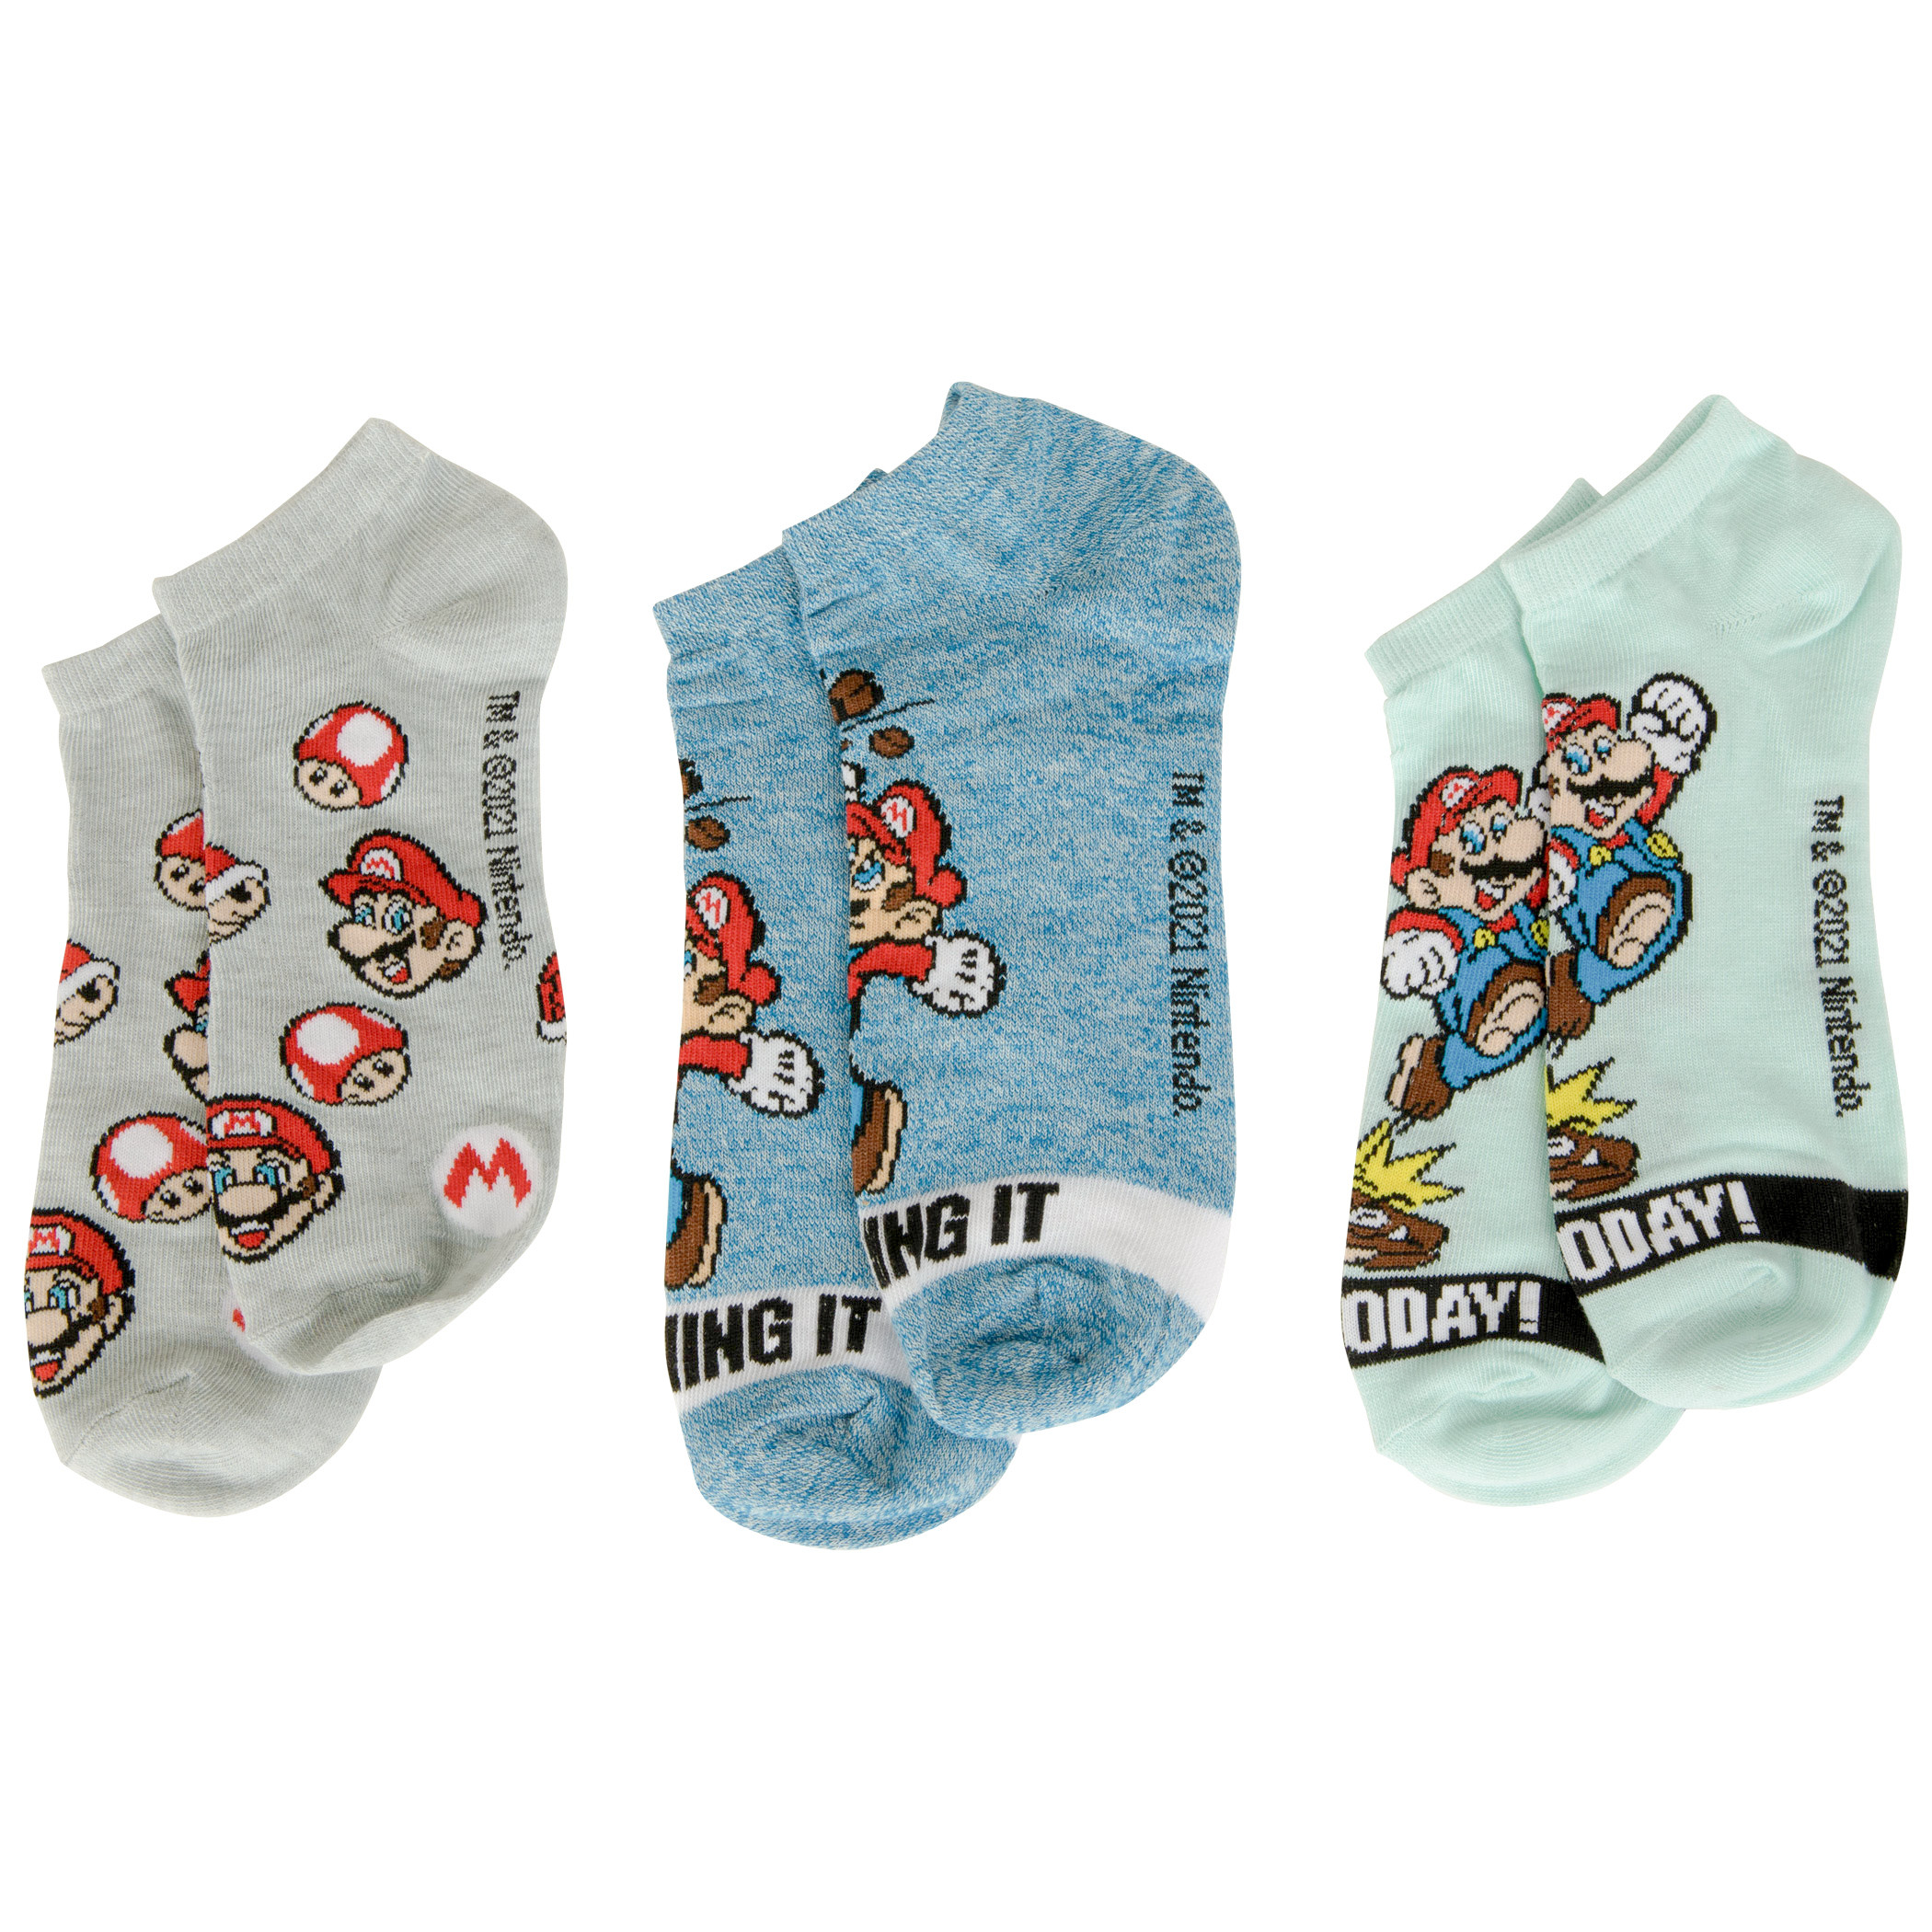 Super Mario Bros. 3-Pair Pack of Mens Ankle Socks